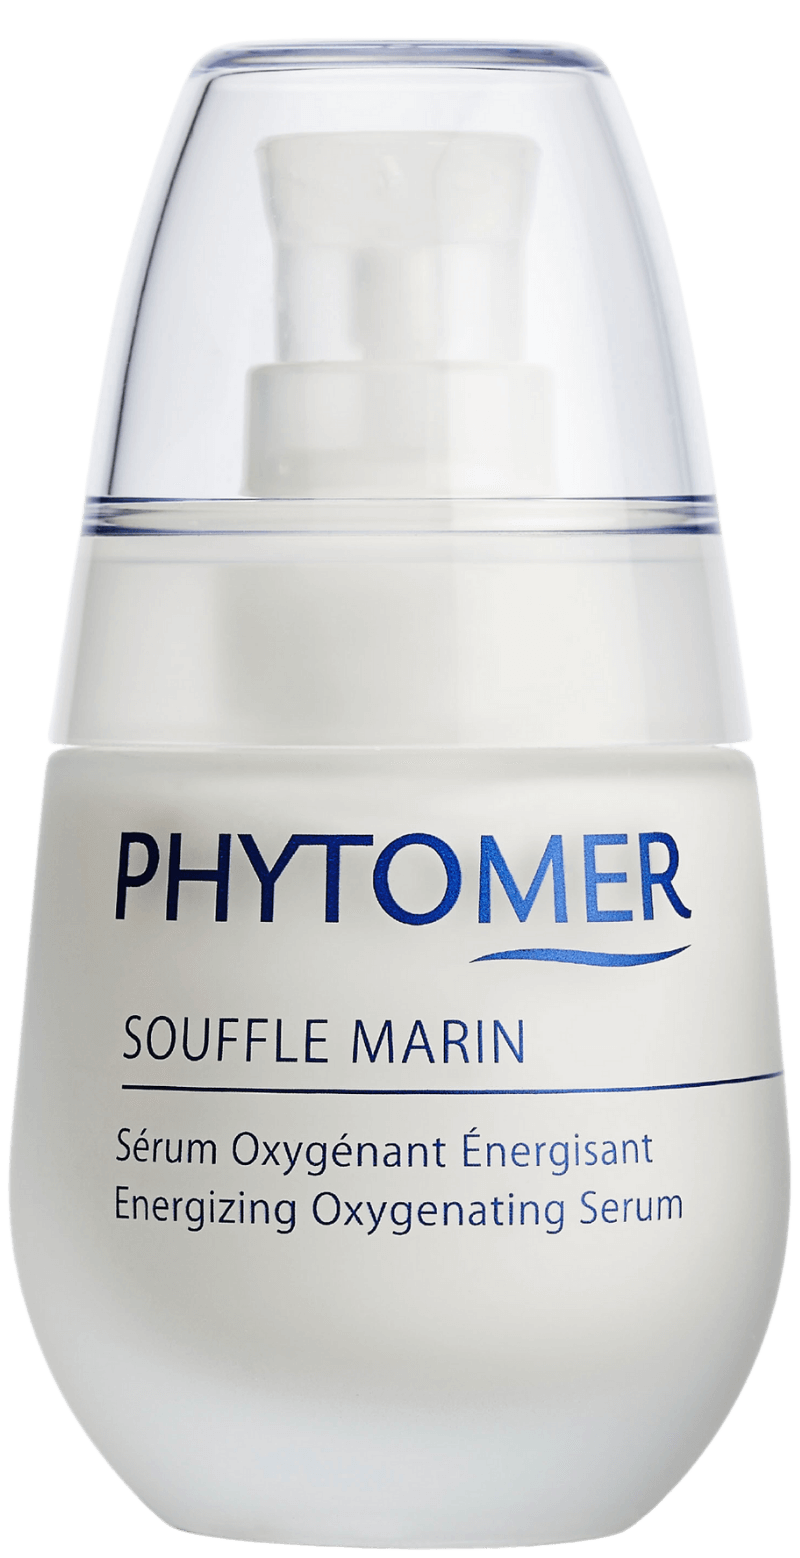 's Phytomer SOUFFLE MARIN Energizing Oxygenating Serum - Bellini's Skin and Parfumerie 